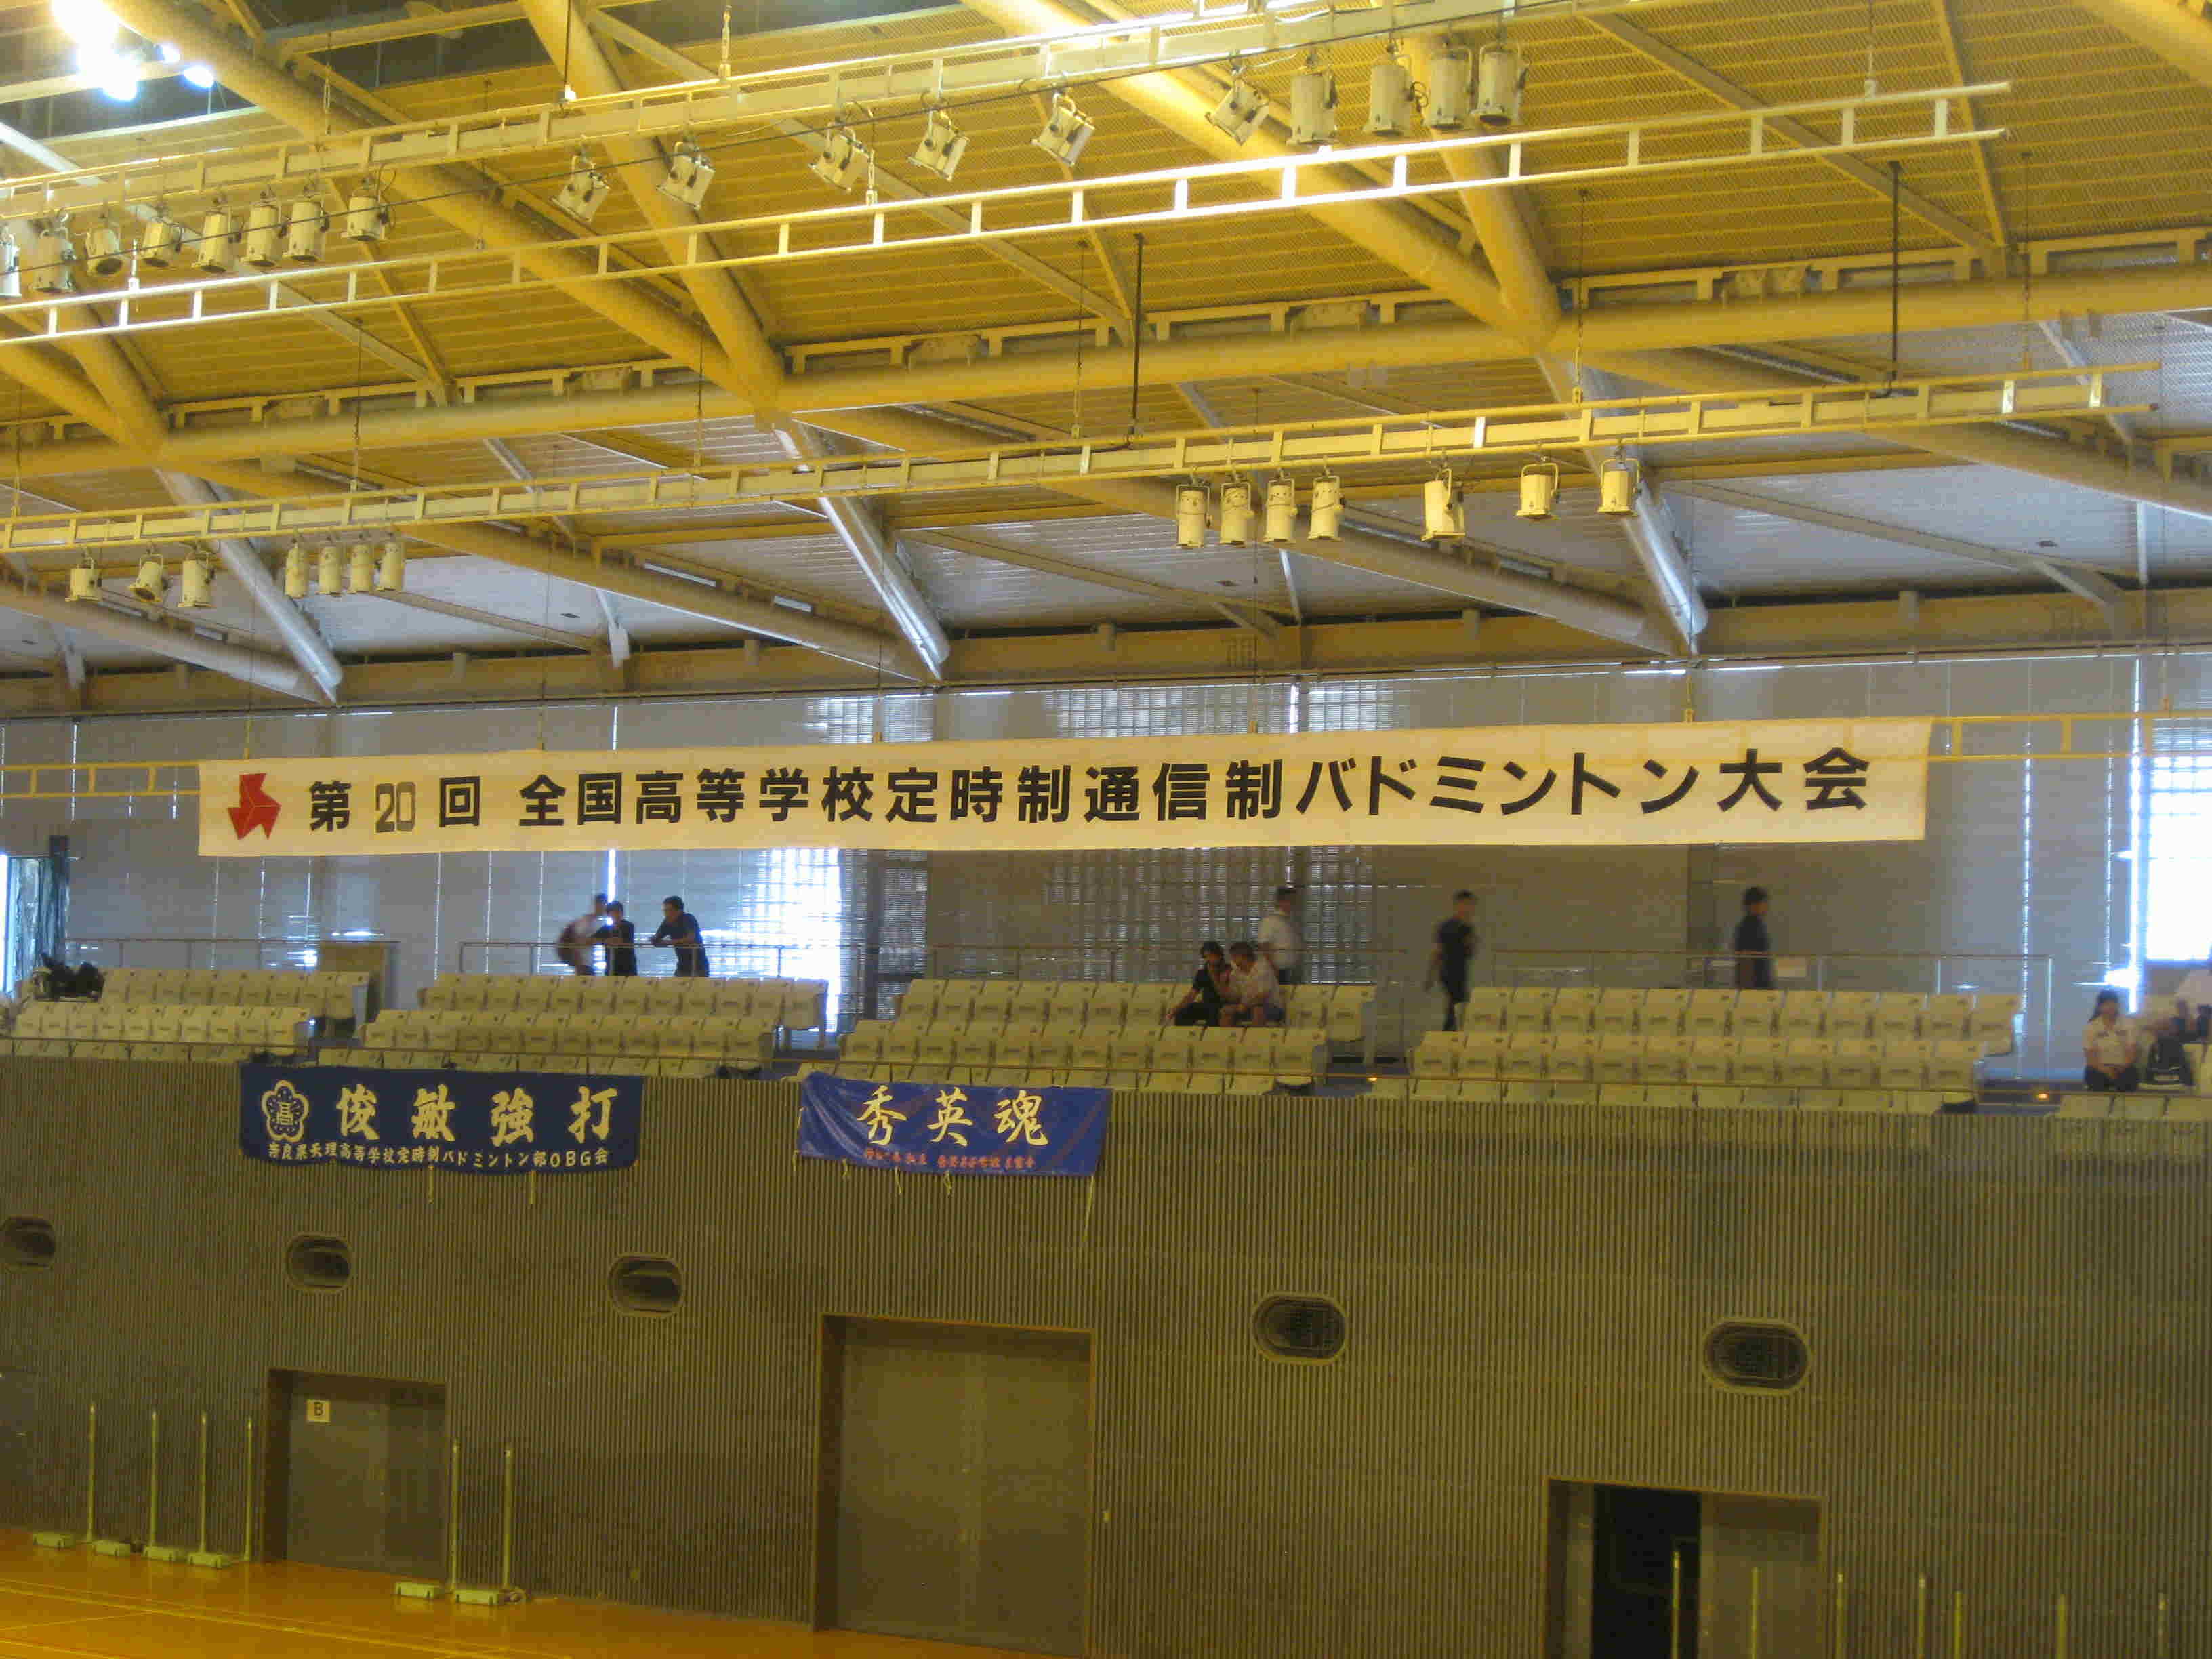 Wakayama Technical High school evening classes